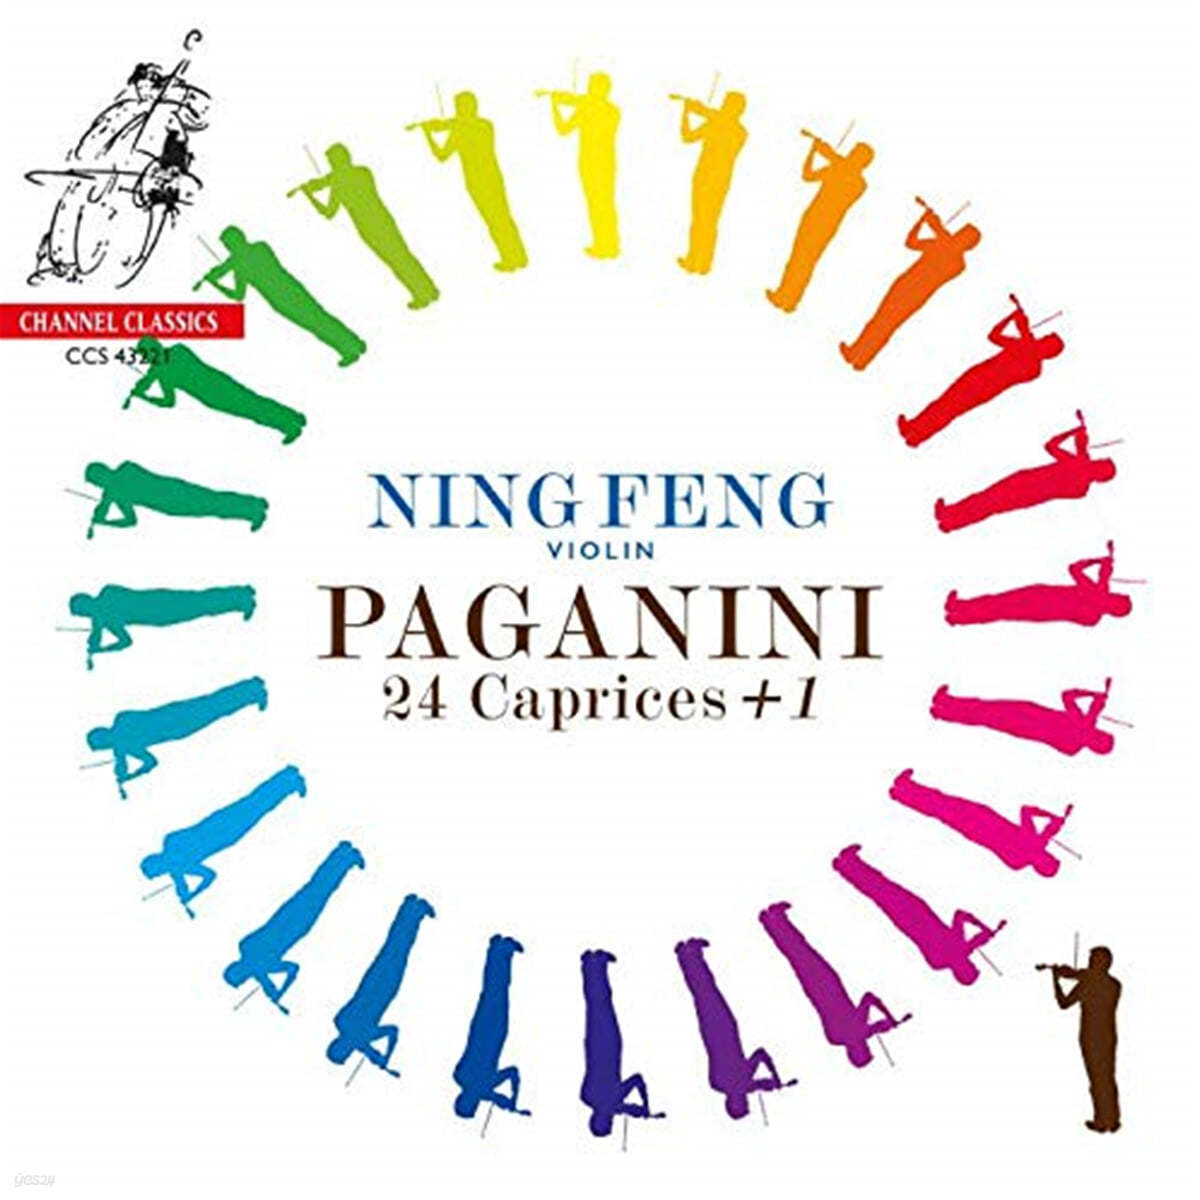 Ning Feng 파가니니: 24개의 무반주 바이올린 카프리스 (Paganini: 24 Caprices +1) 